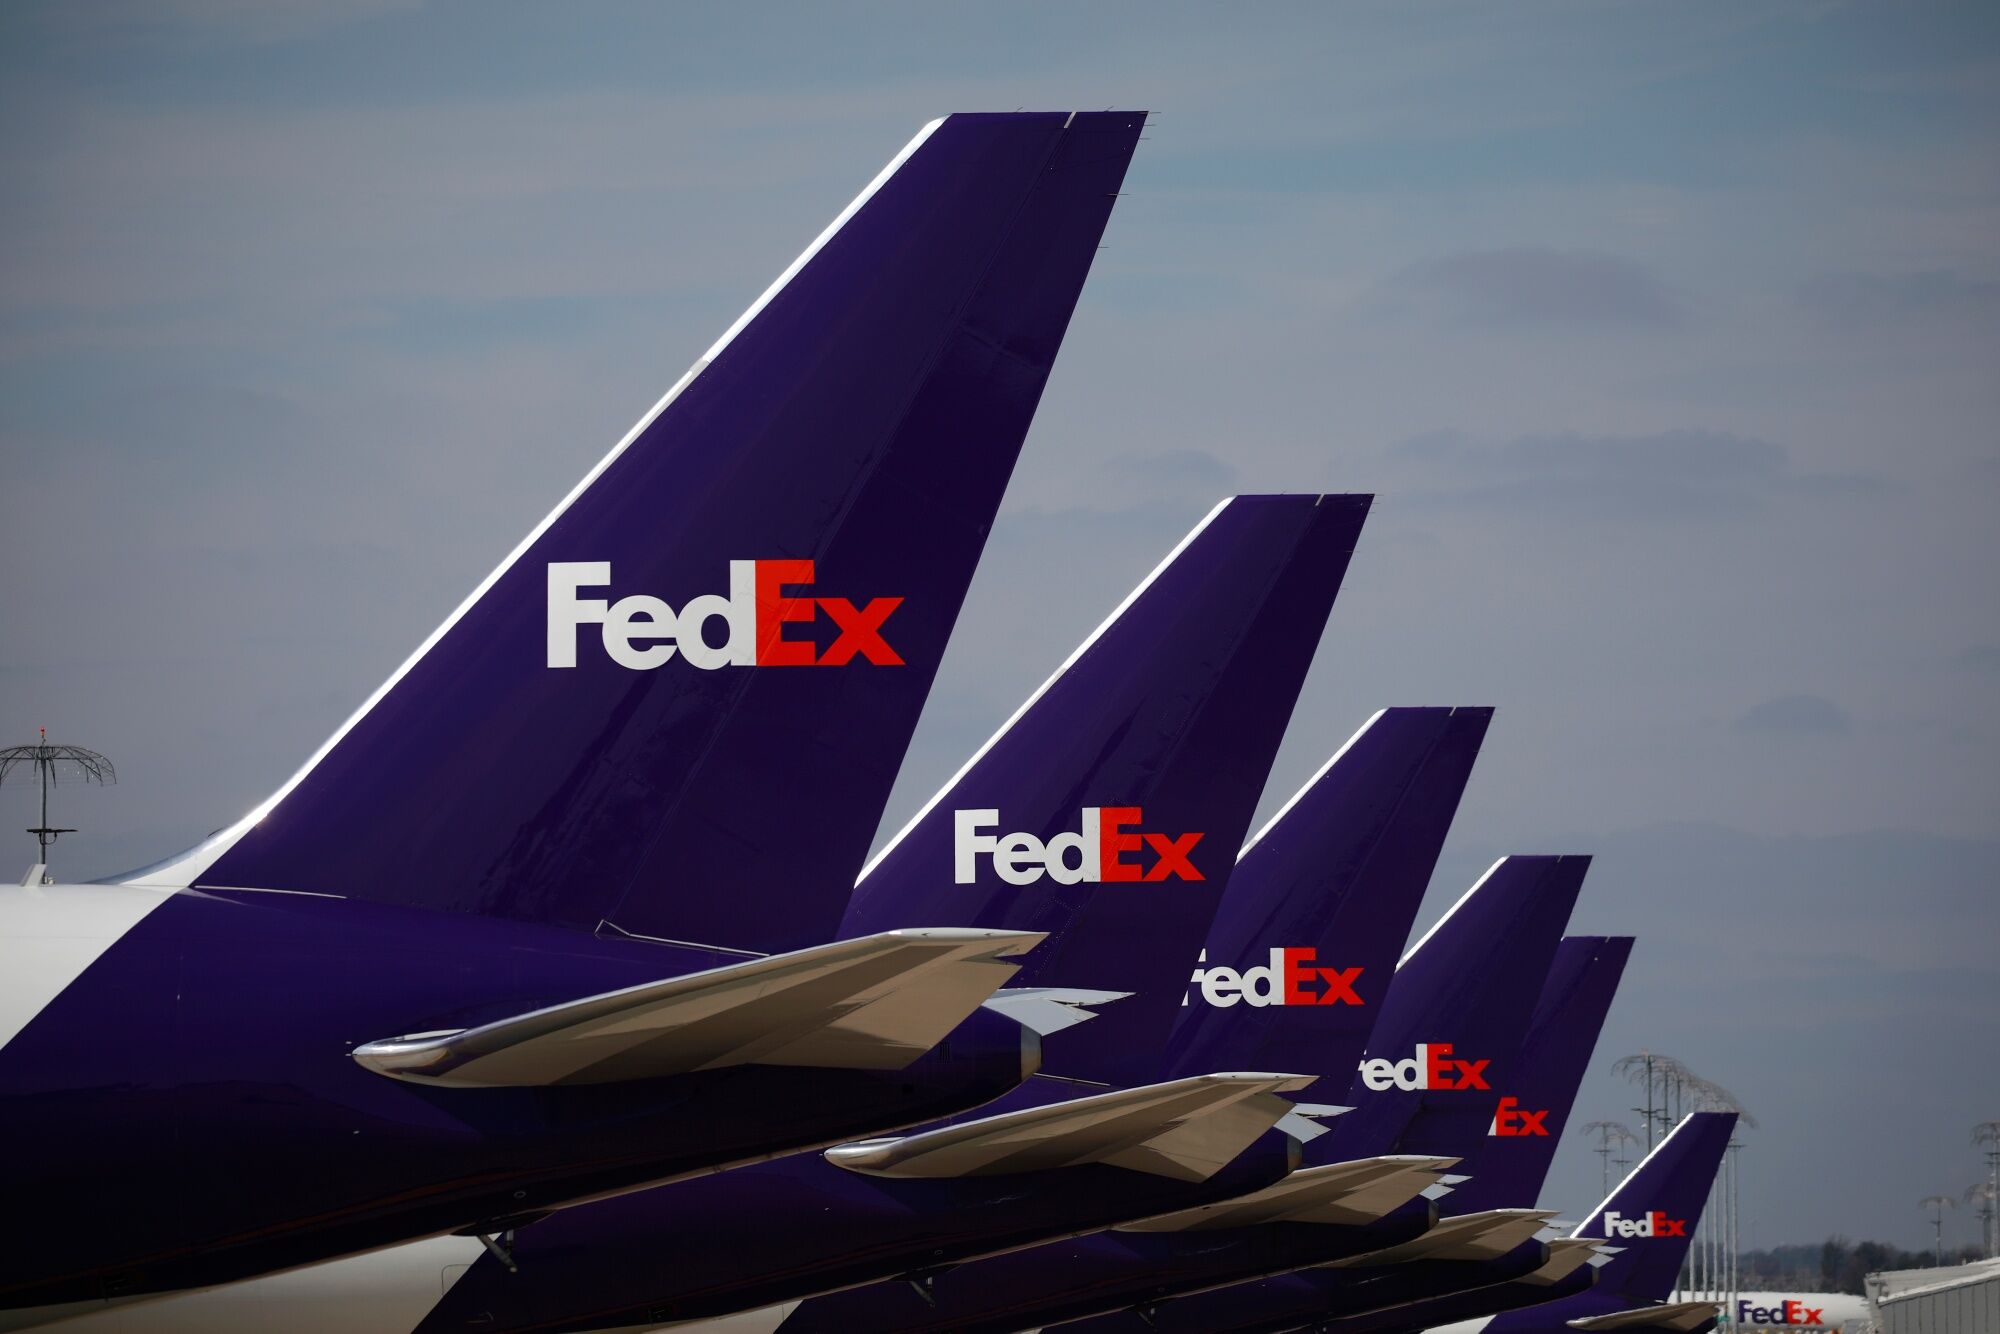 FedEx names Raj Subramaniam as CEO, replacing founder Fred Smith